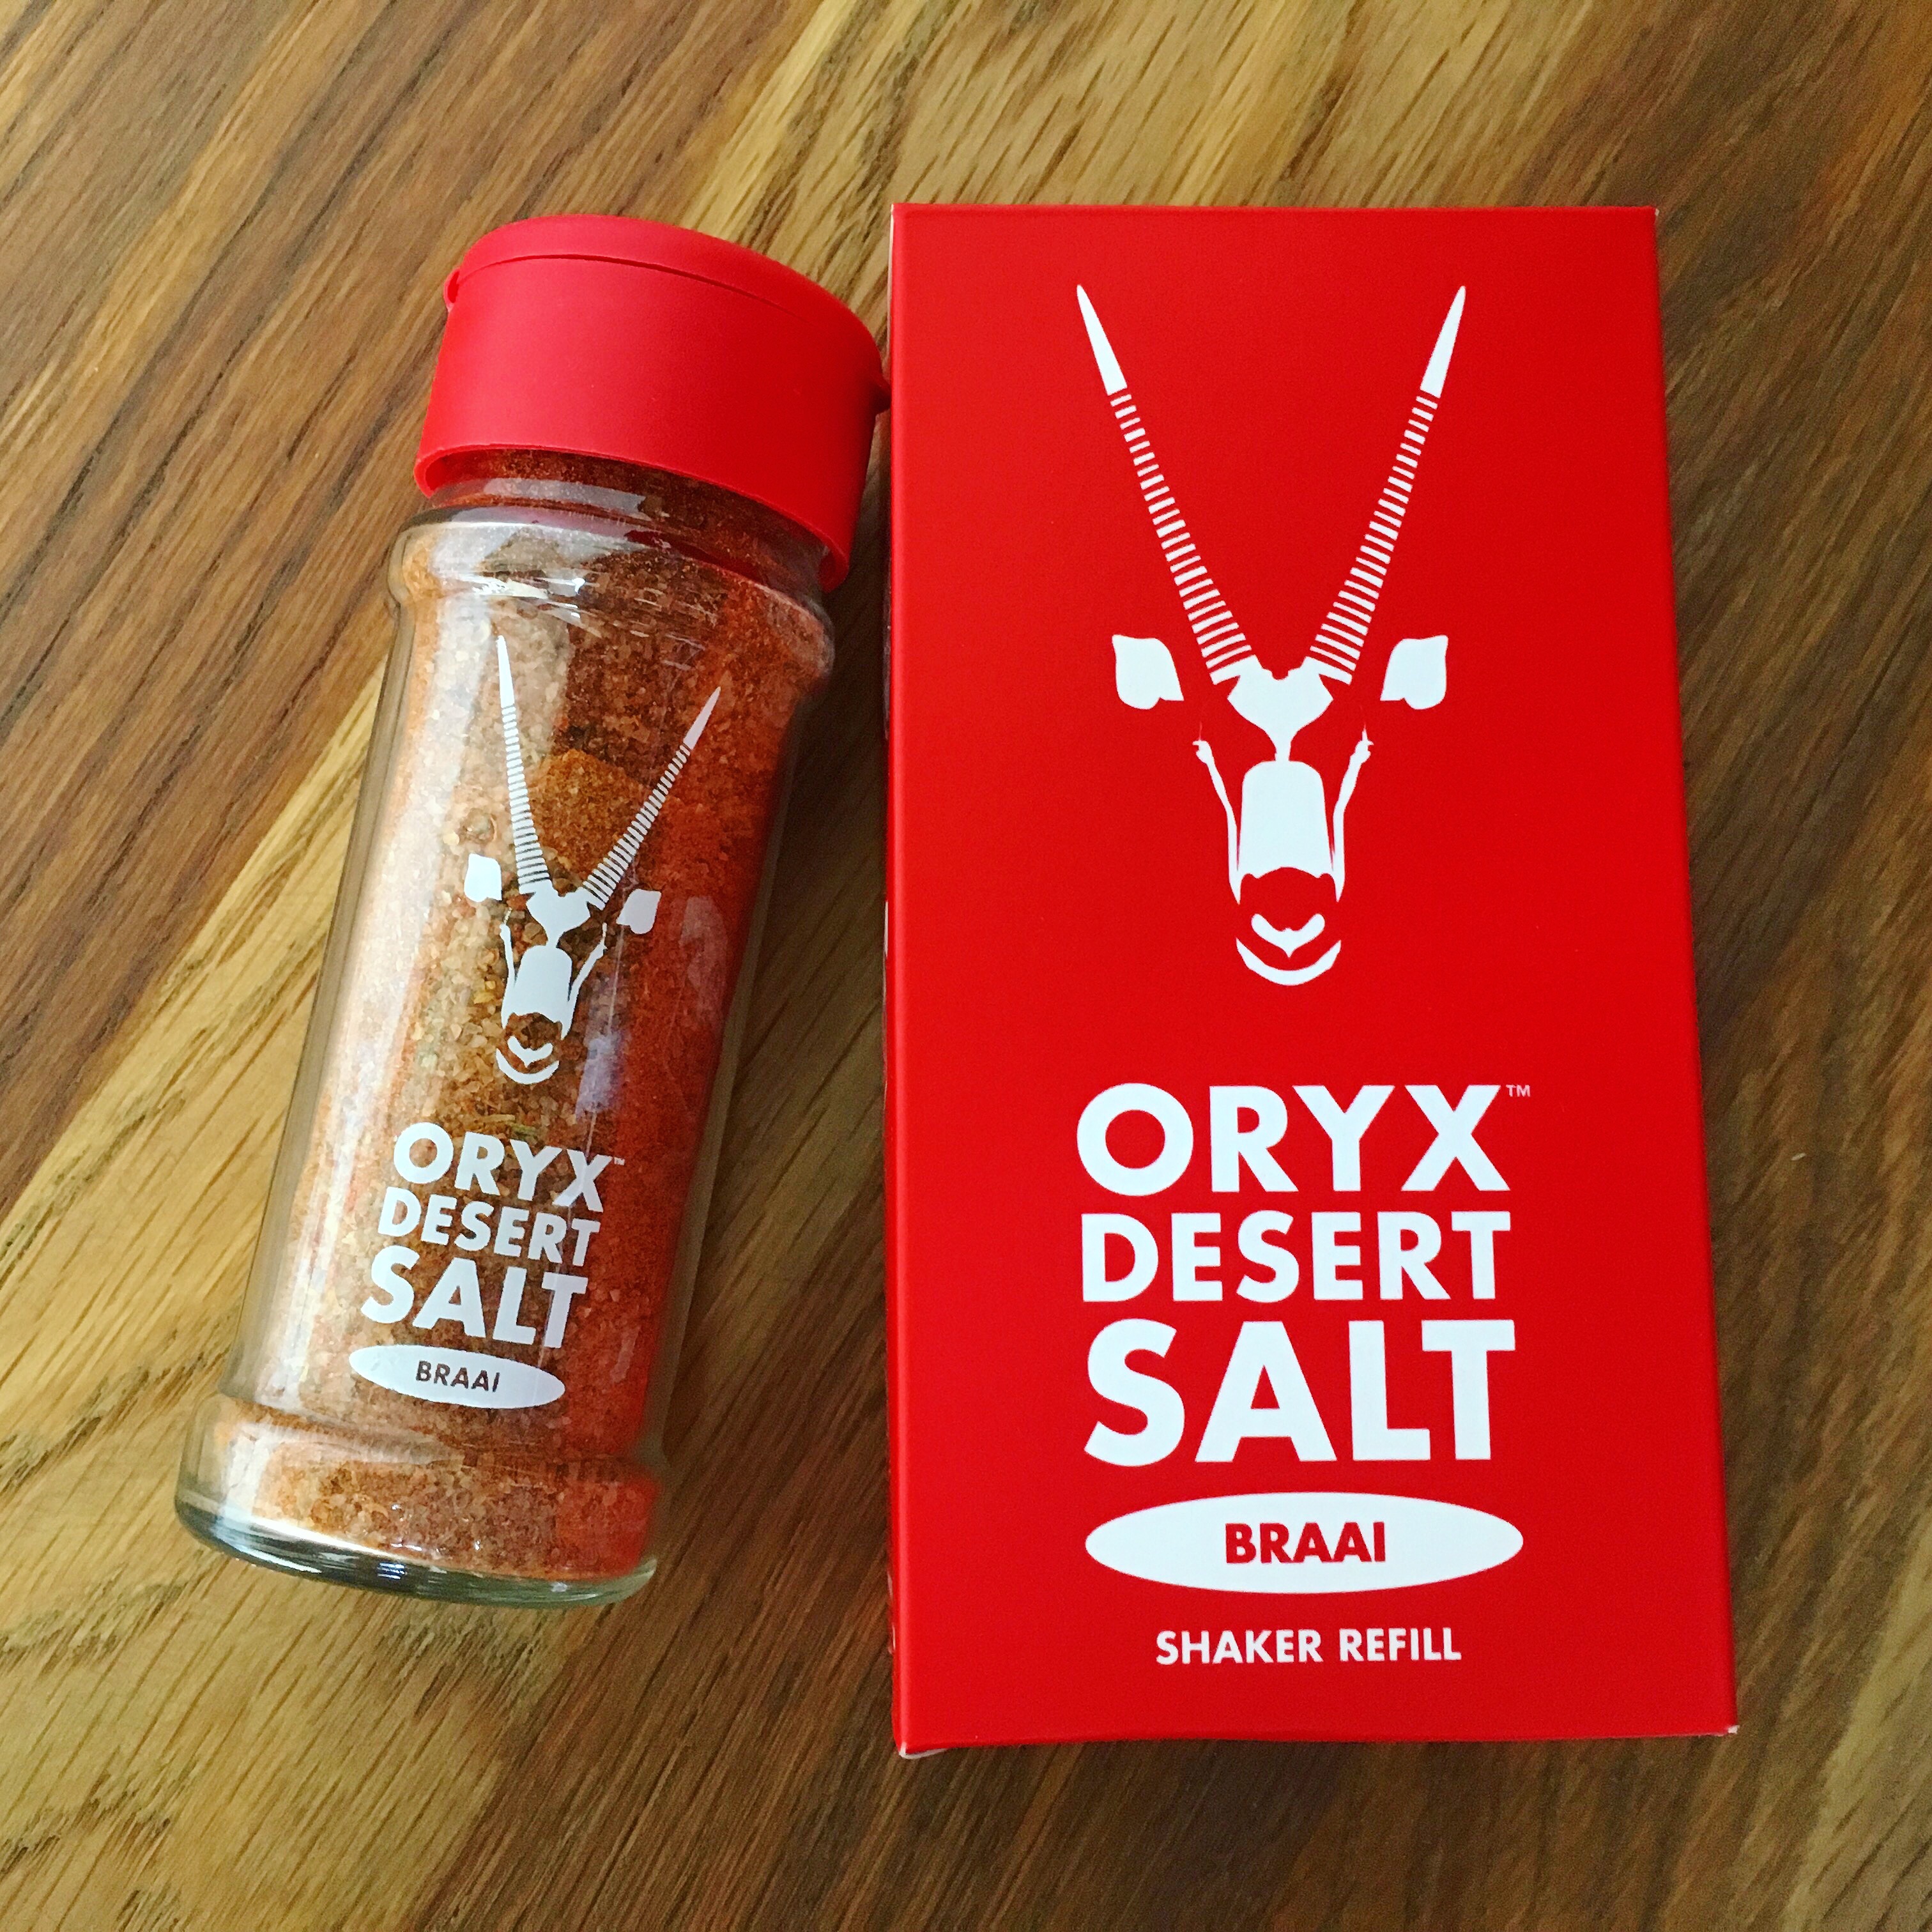 Oryx Desert Salt: Braai (taken with my iPhone 6s)